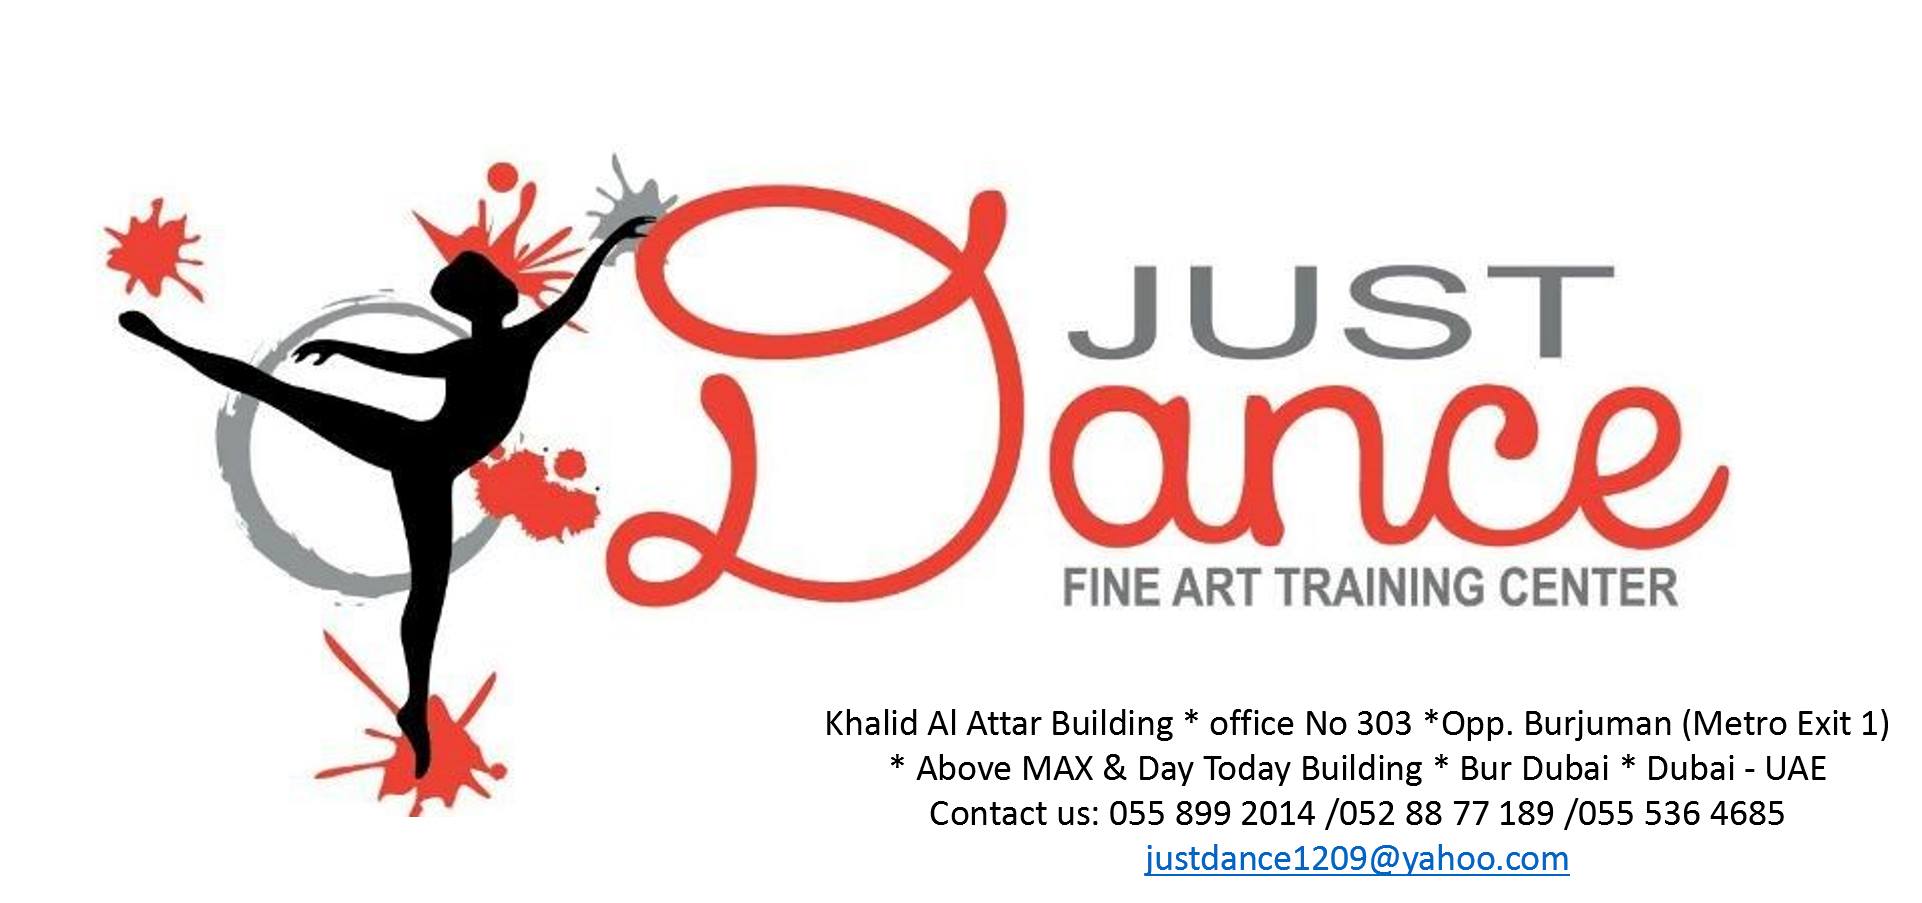 Just Dance Fine Art Training Center Logo